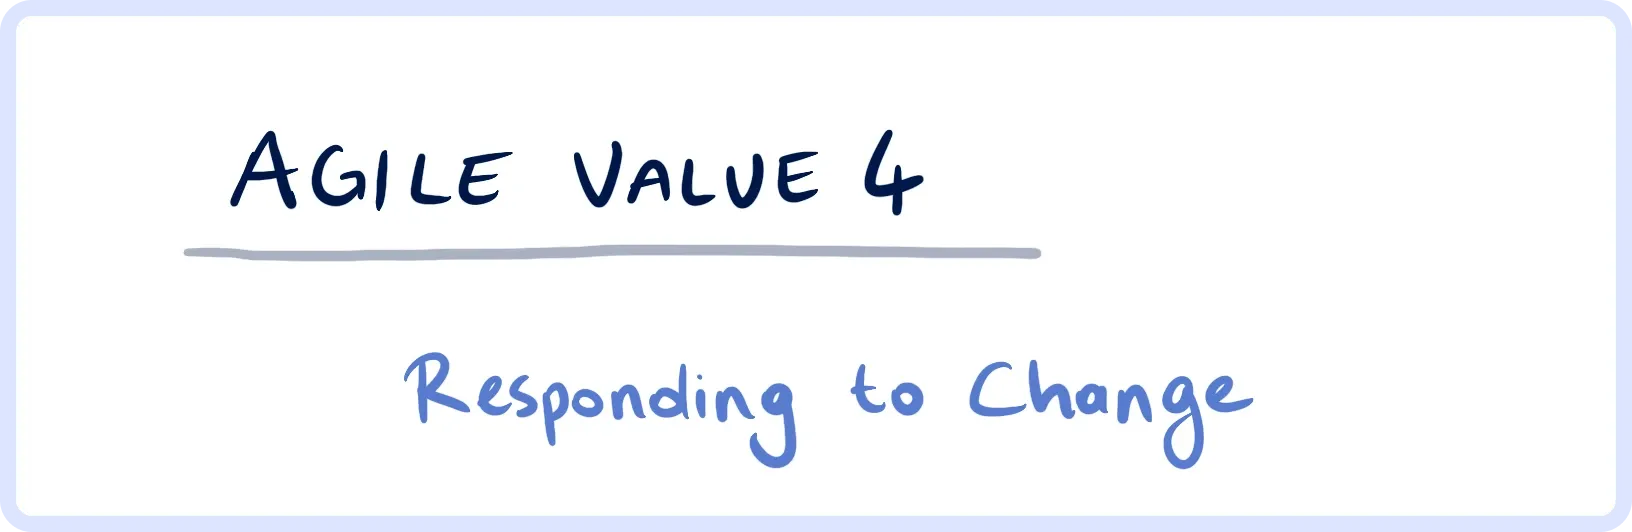 Agile Value 4 Responding to Change